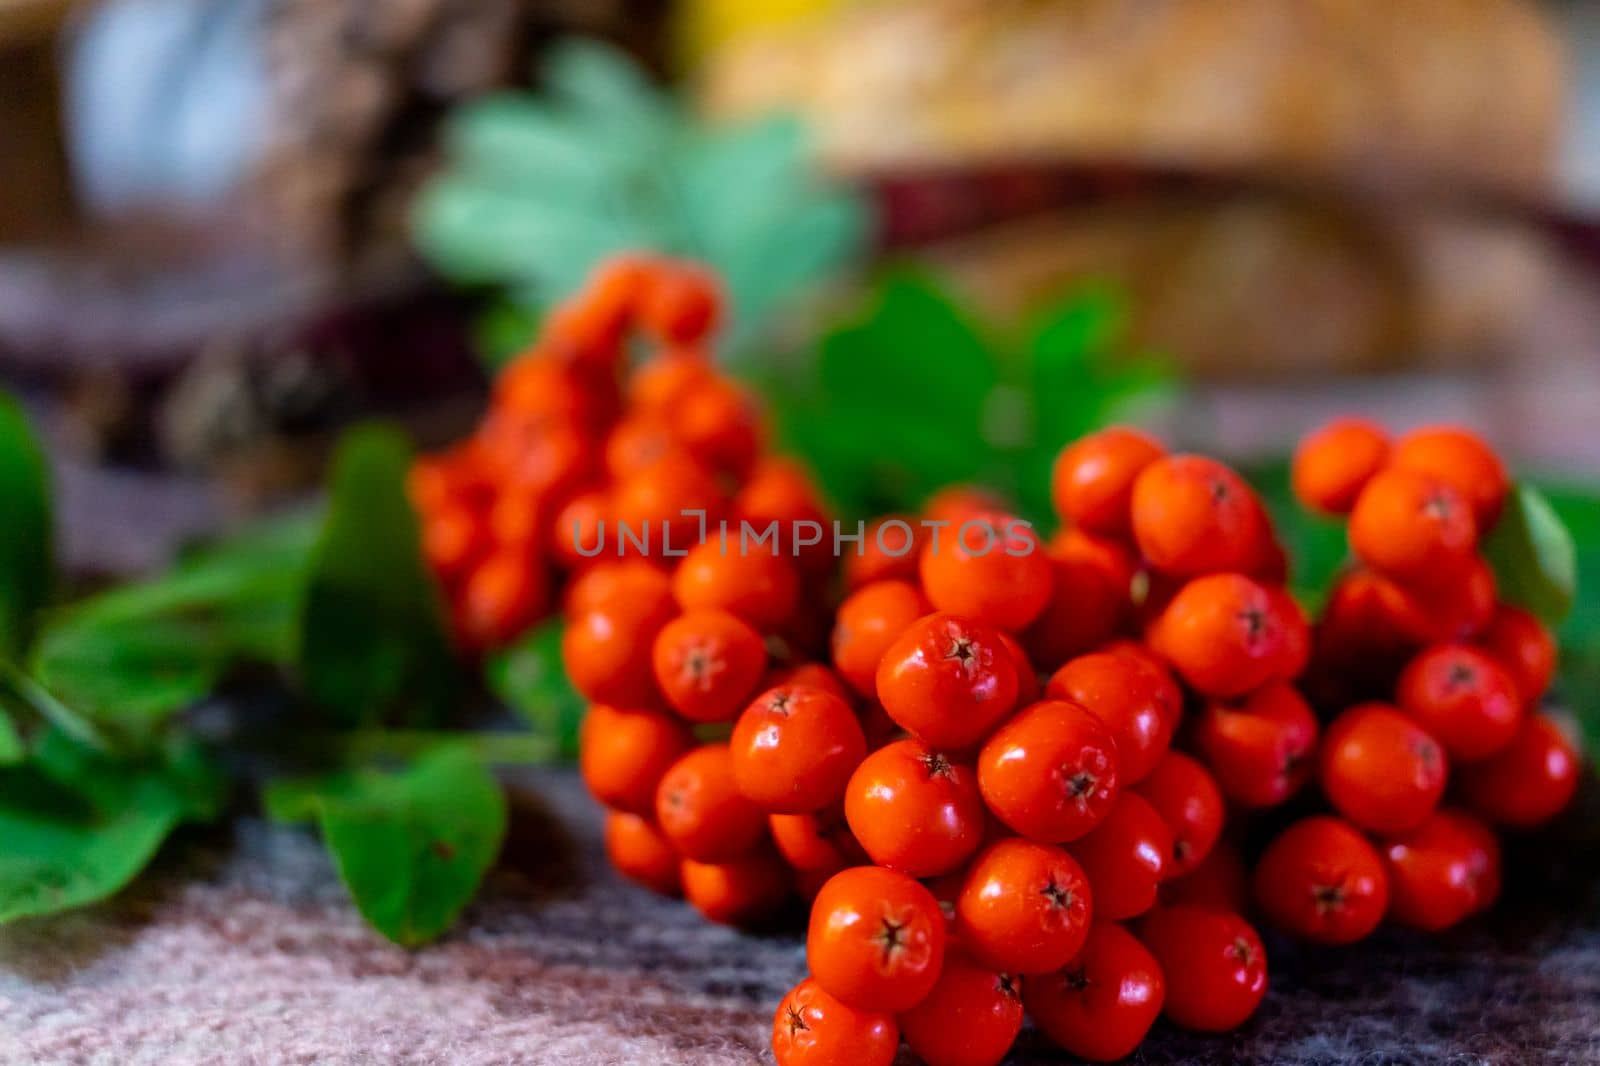 A bunch of red rowanberries on a blurred background by Serhii_Voroshchuk